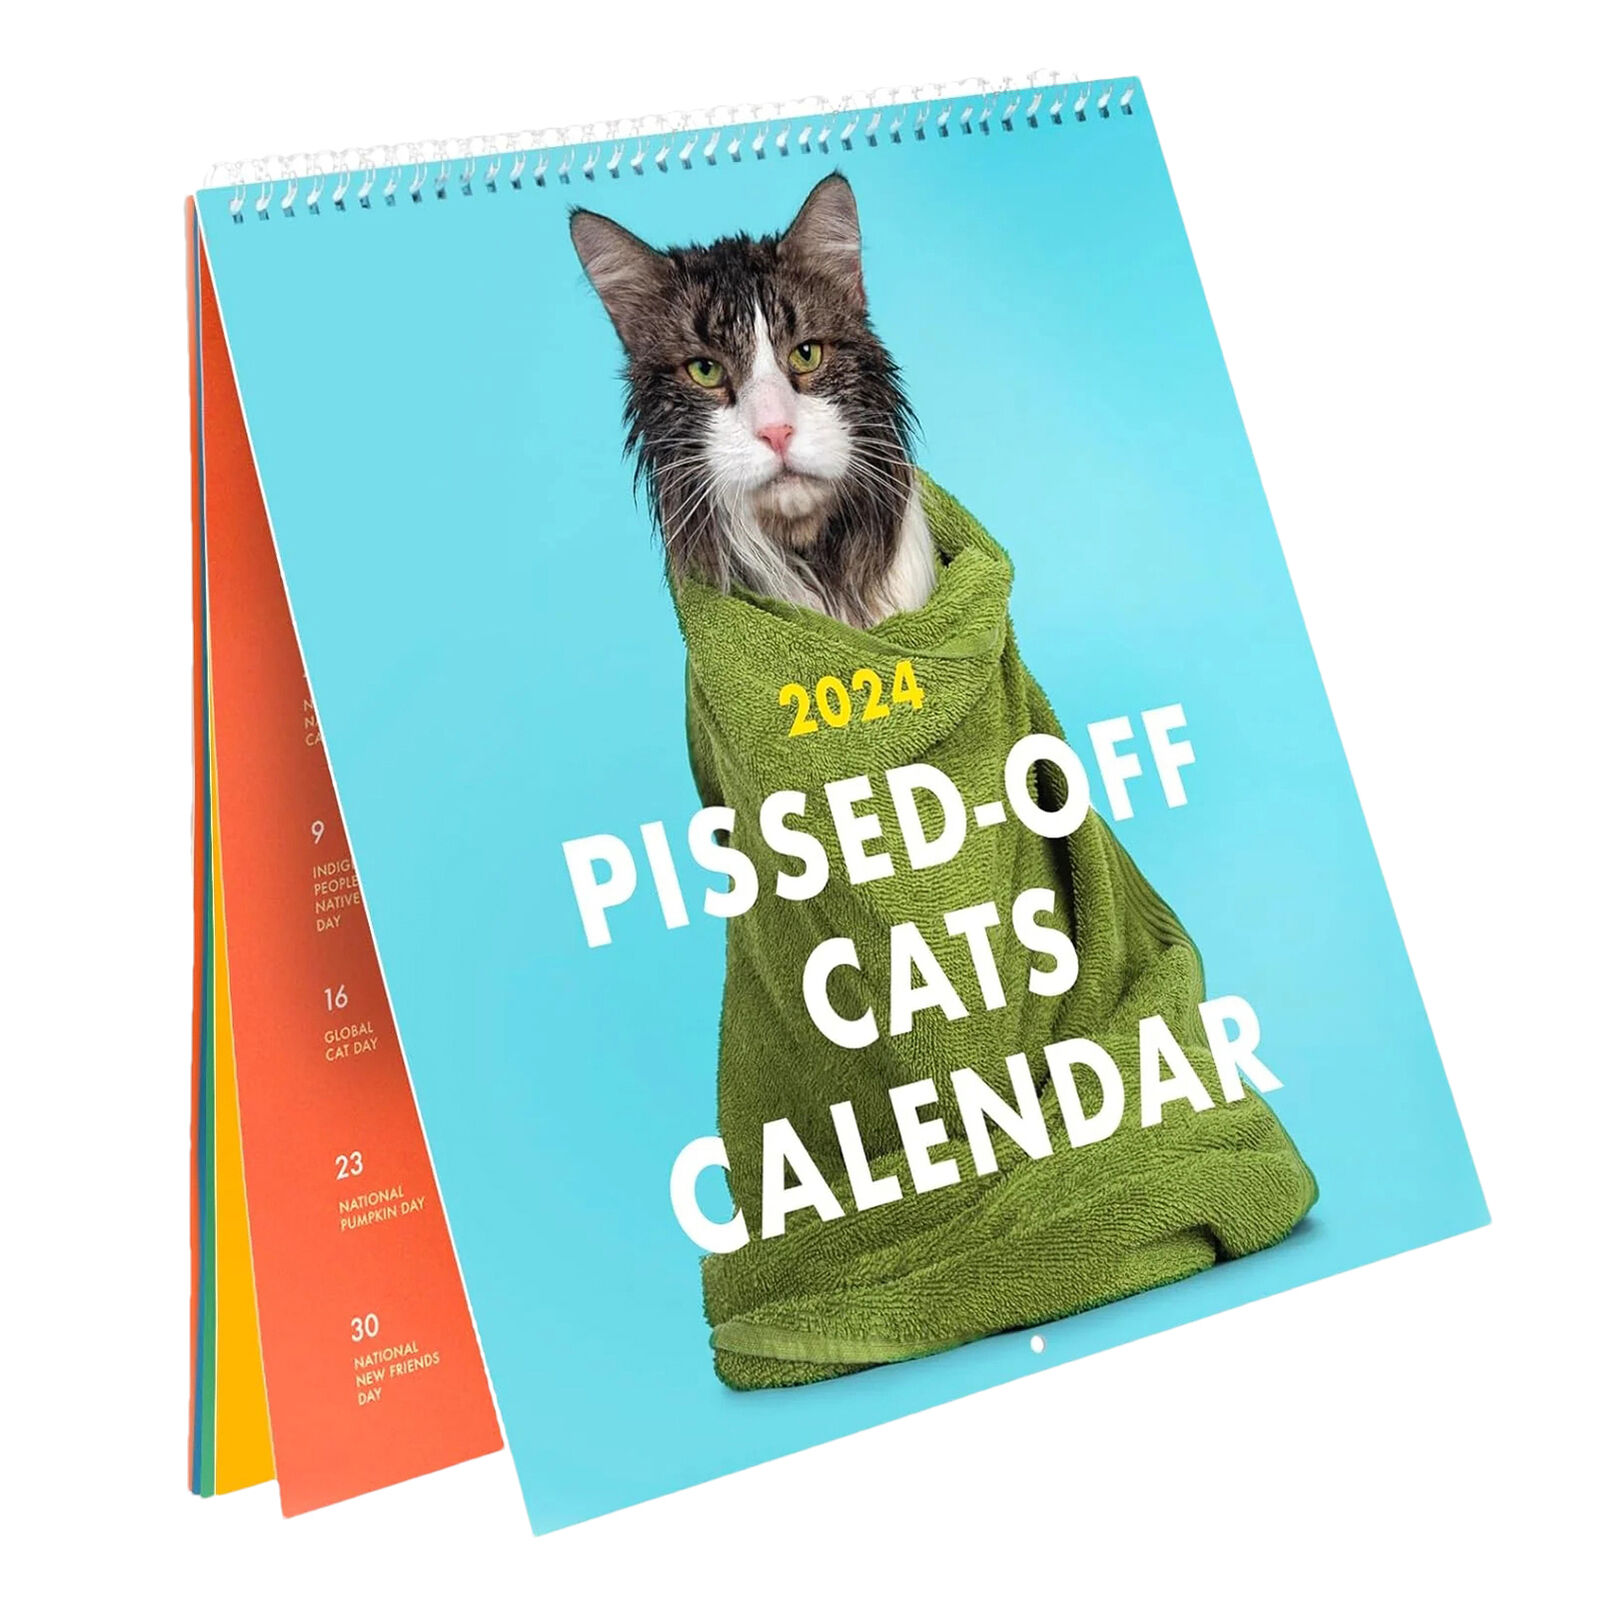 2024 PissedOff Cats Calendar,Angry Fun Cats Wall Hanging Calendar